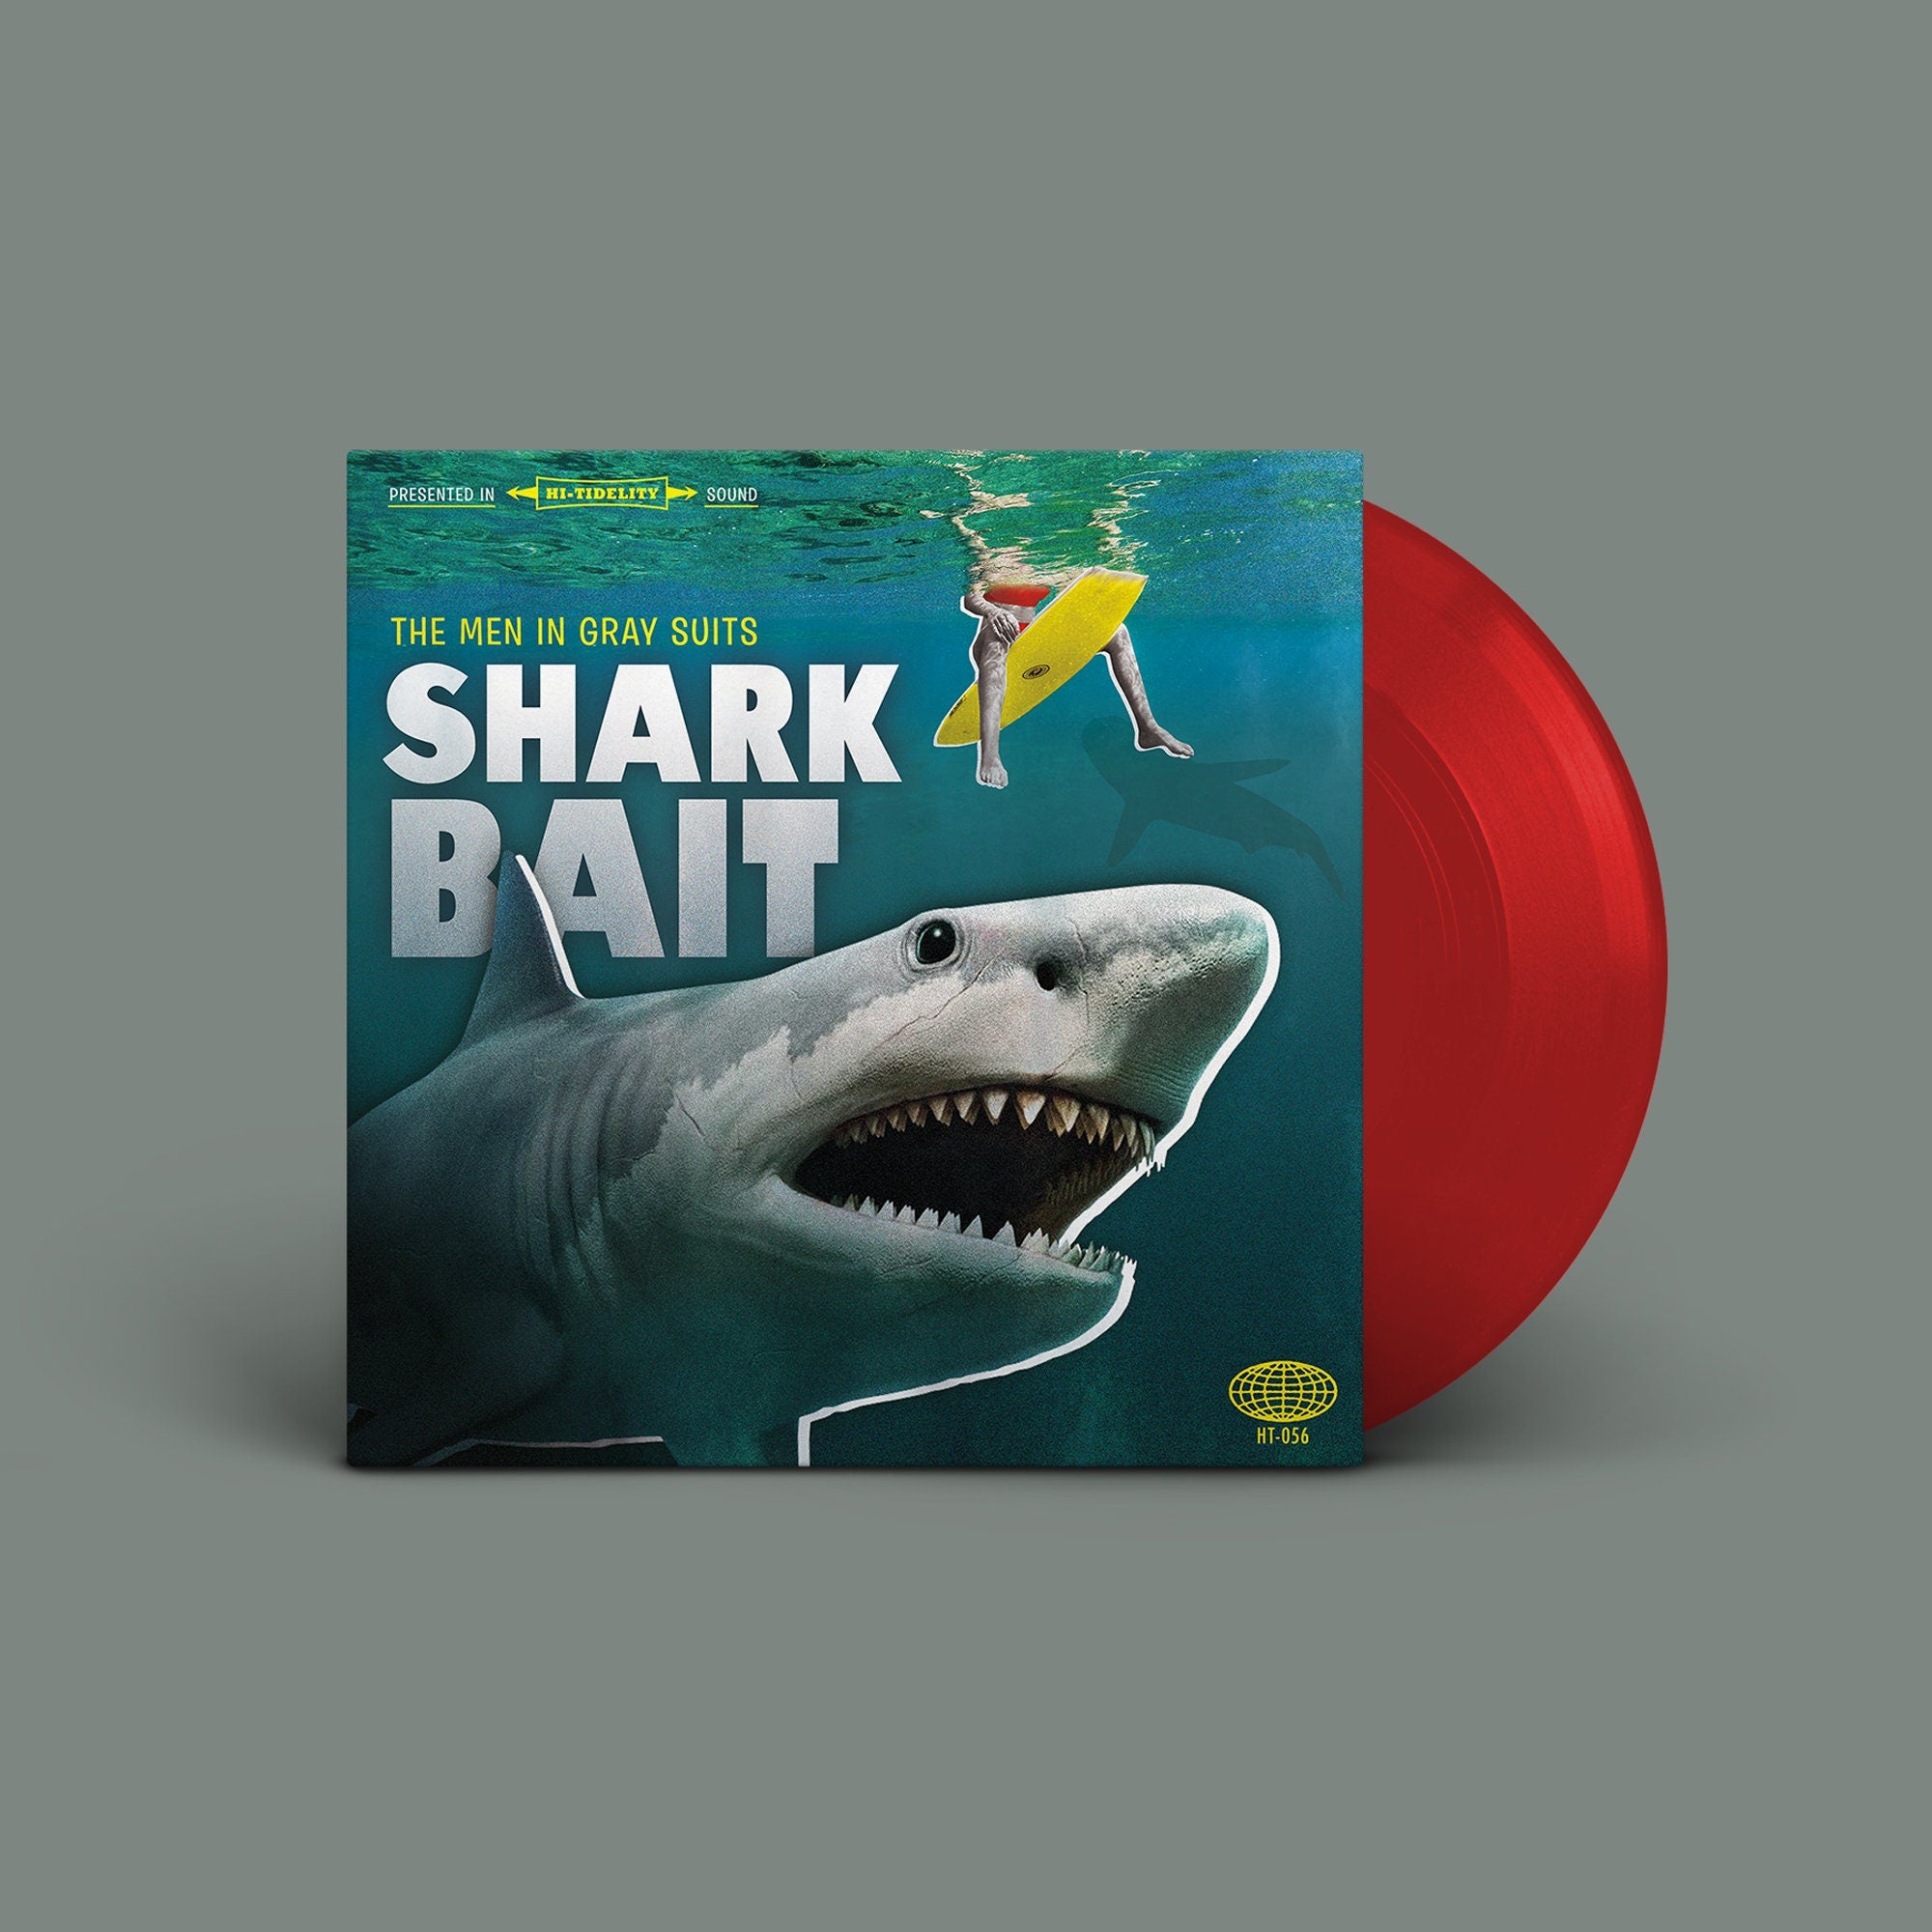 The Men In Gray Suits “Shark Bait” EP – Hi-Tide Recordings & Nu-Tone